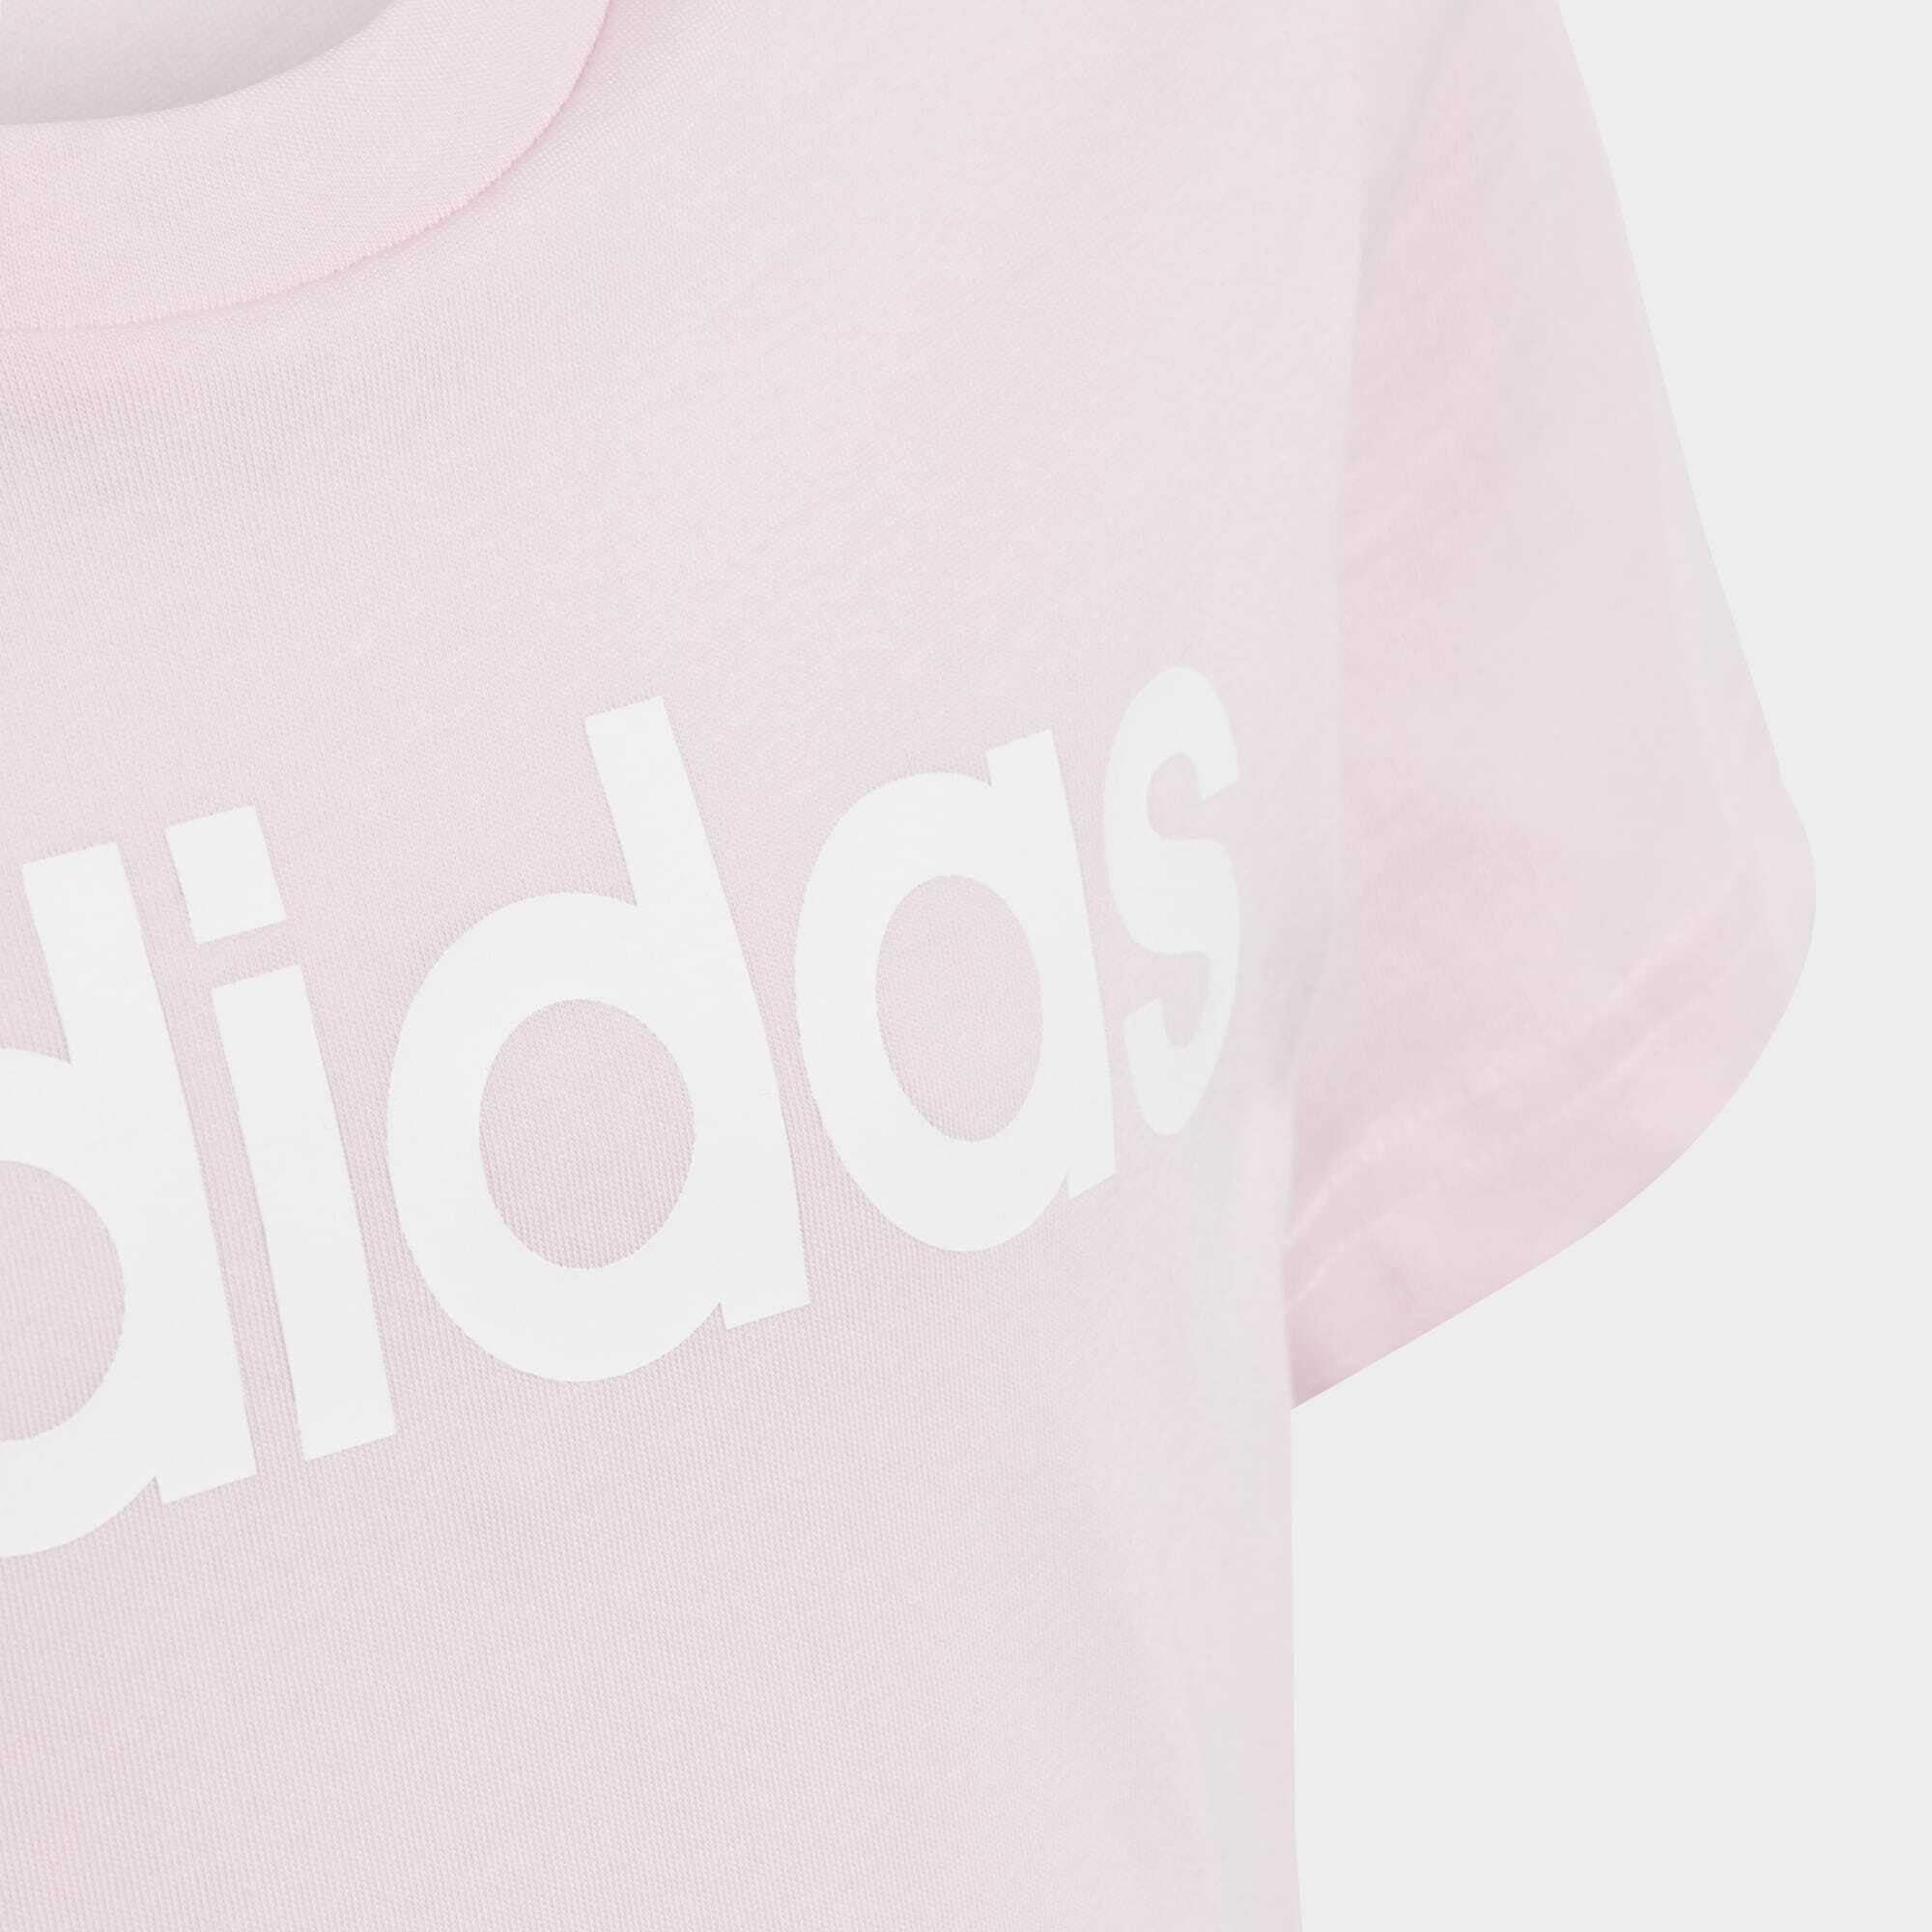 COTTON FIT Clear adidas T-Shirt White SLIM LINEAR Sportswear LOGO Pink T-SHIRT / ESSENTIALS